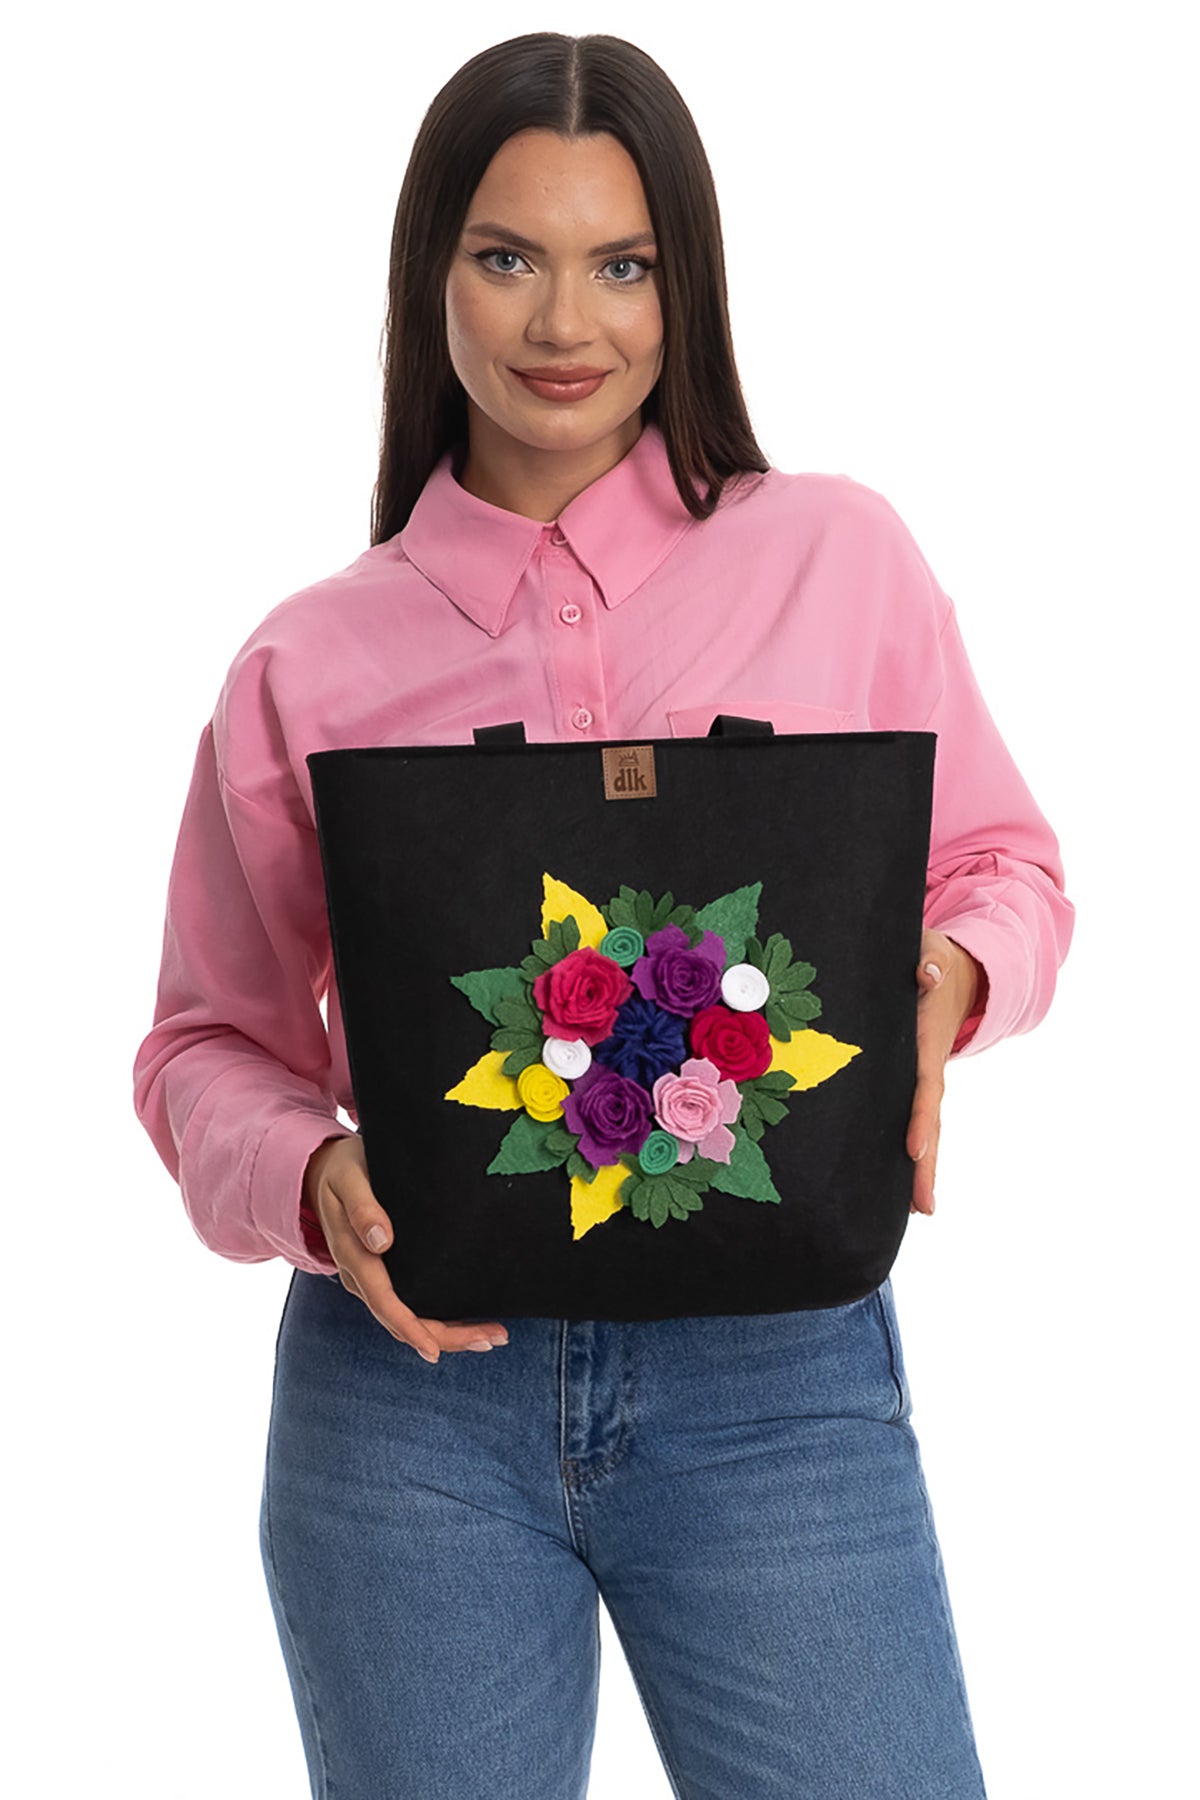 Handmade Medium Size Felt Shoulder Bag - From Roses -35x31cm